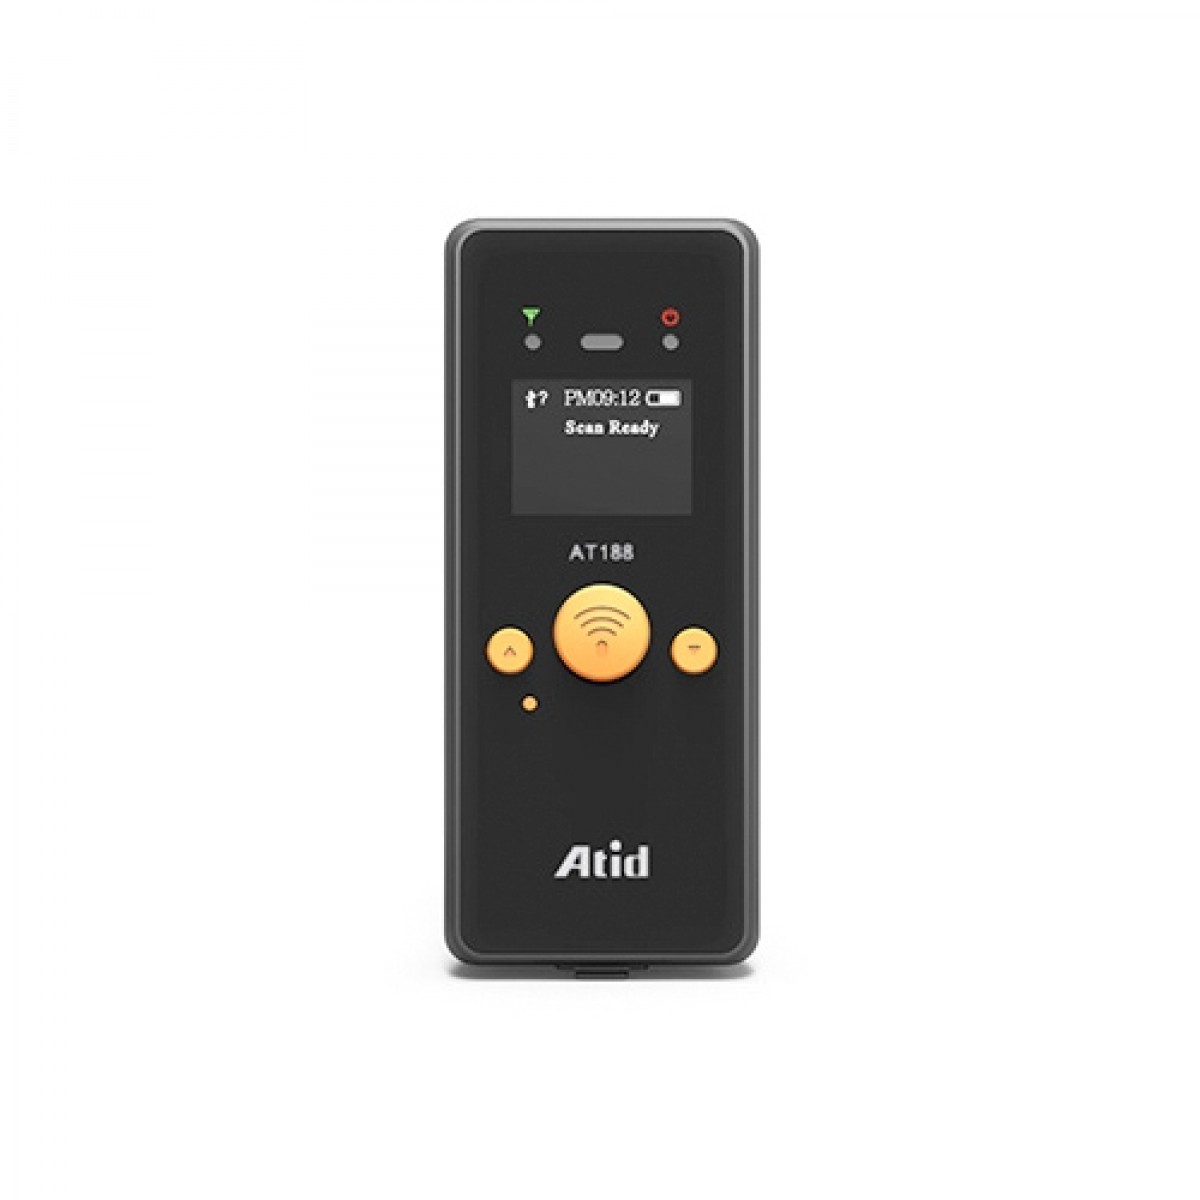 Atid AT288 Mobile RFID Reader